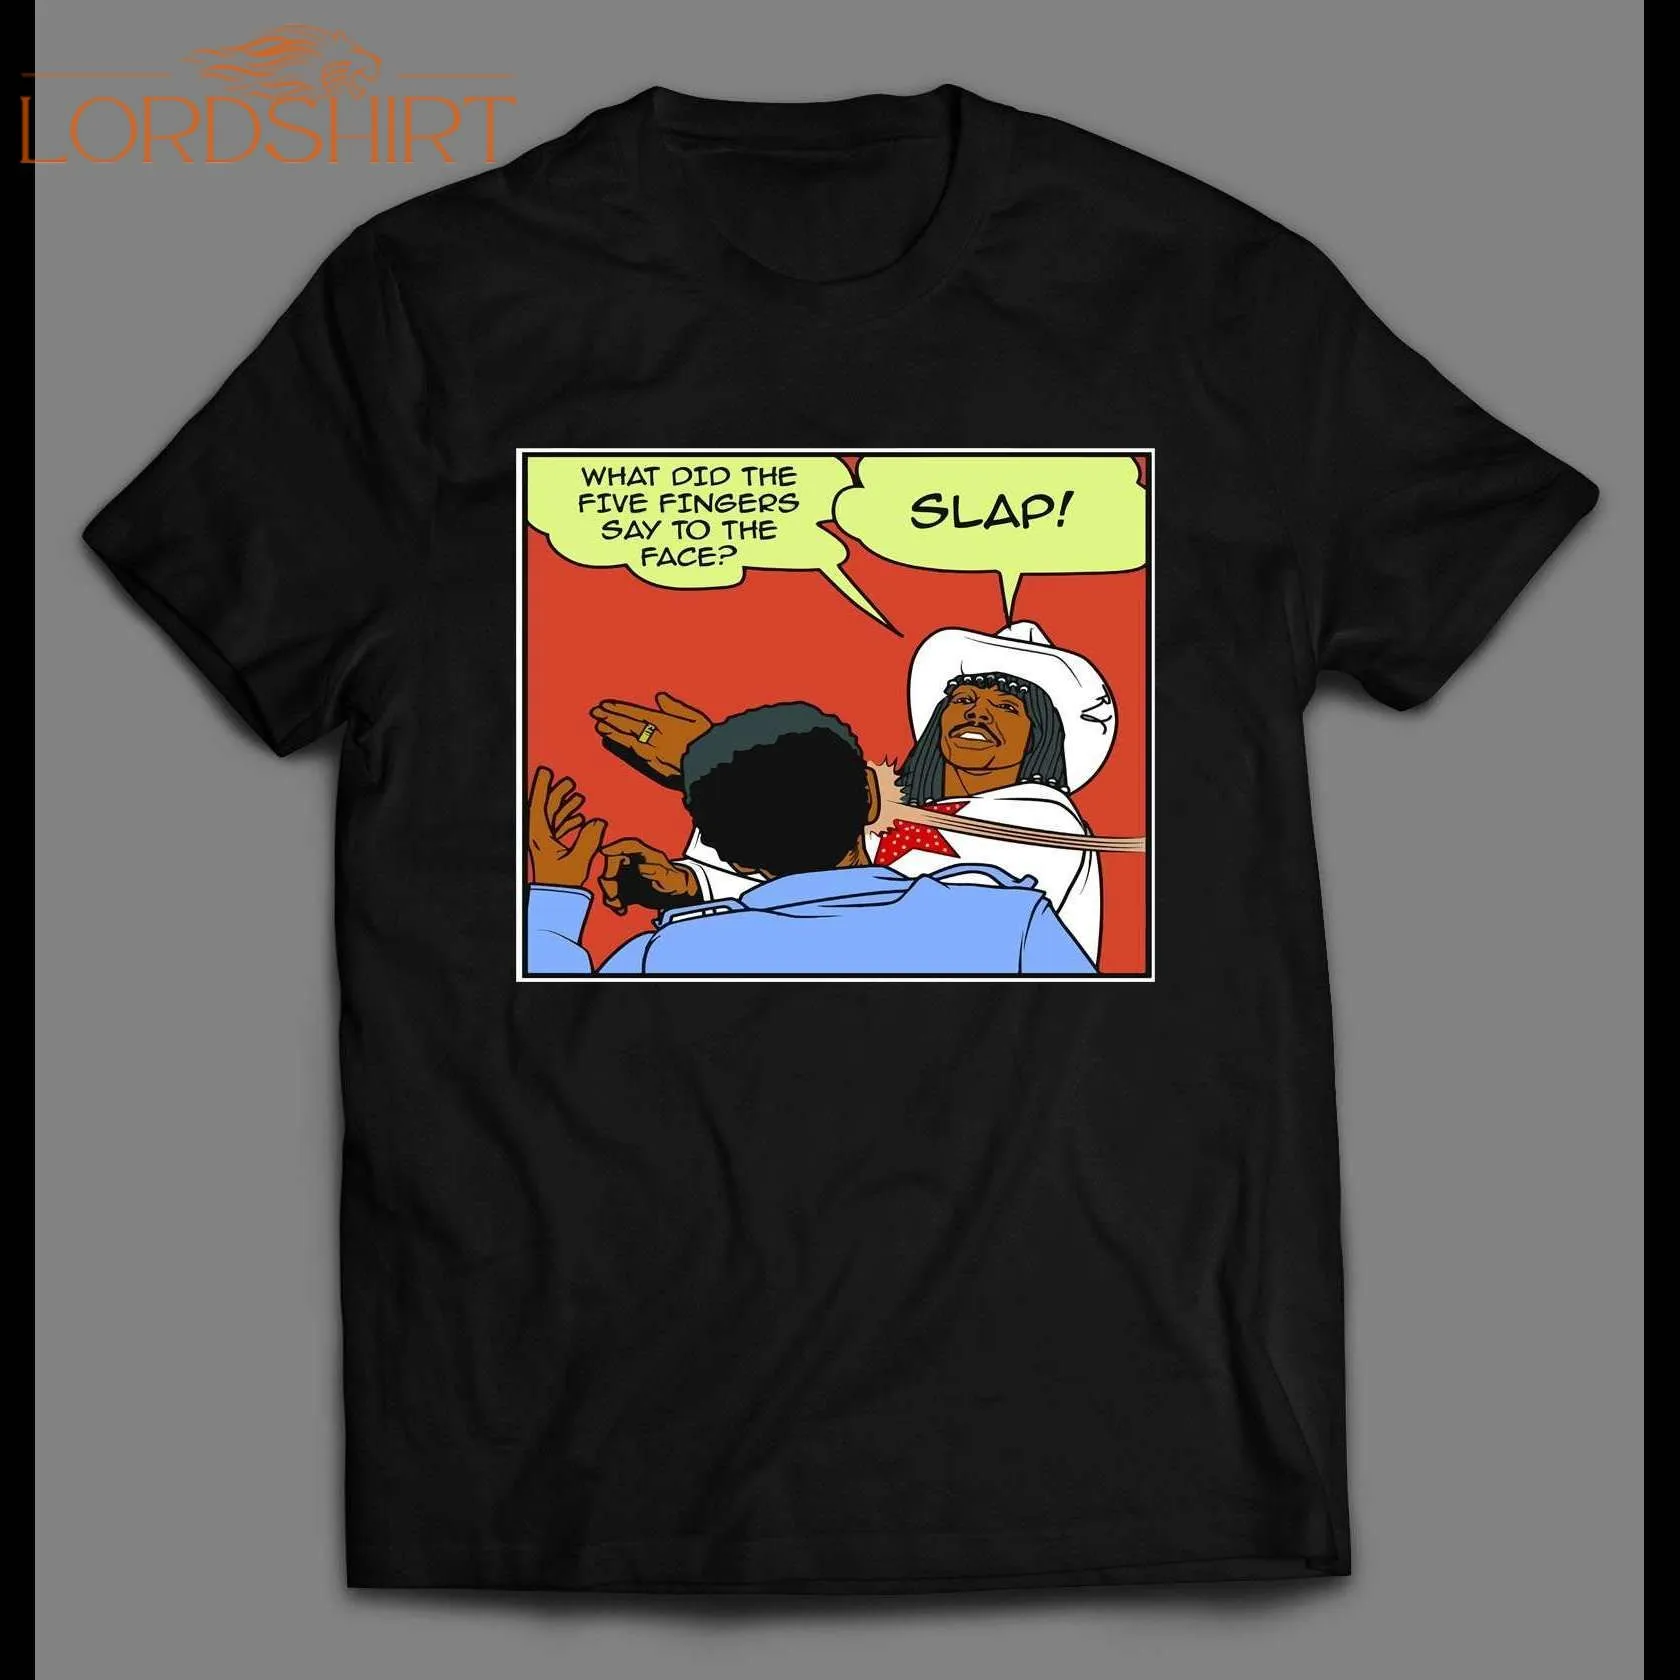 Dave Chappelle's Rick James Slap Comic Strip Parody Shirt